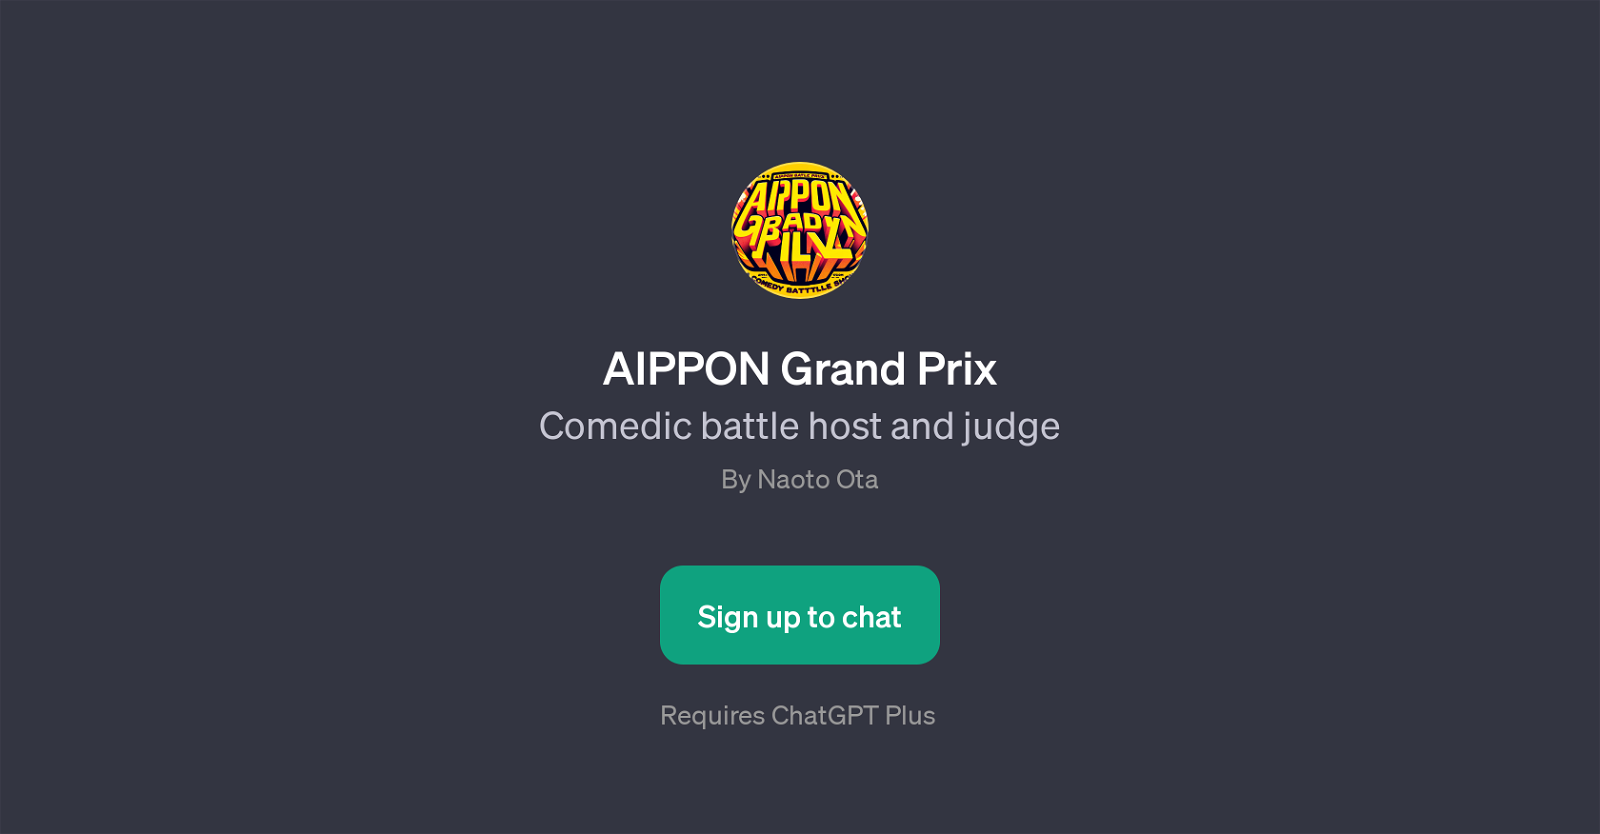 AIPPON Grand Prix website